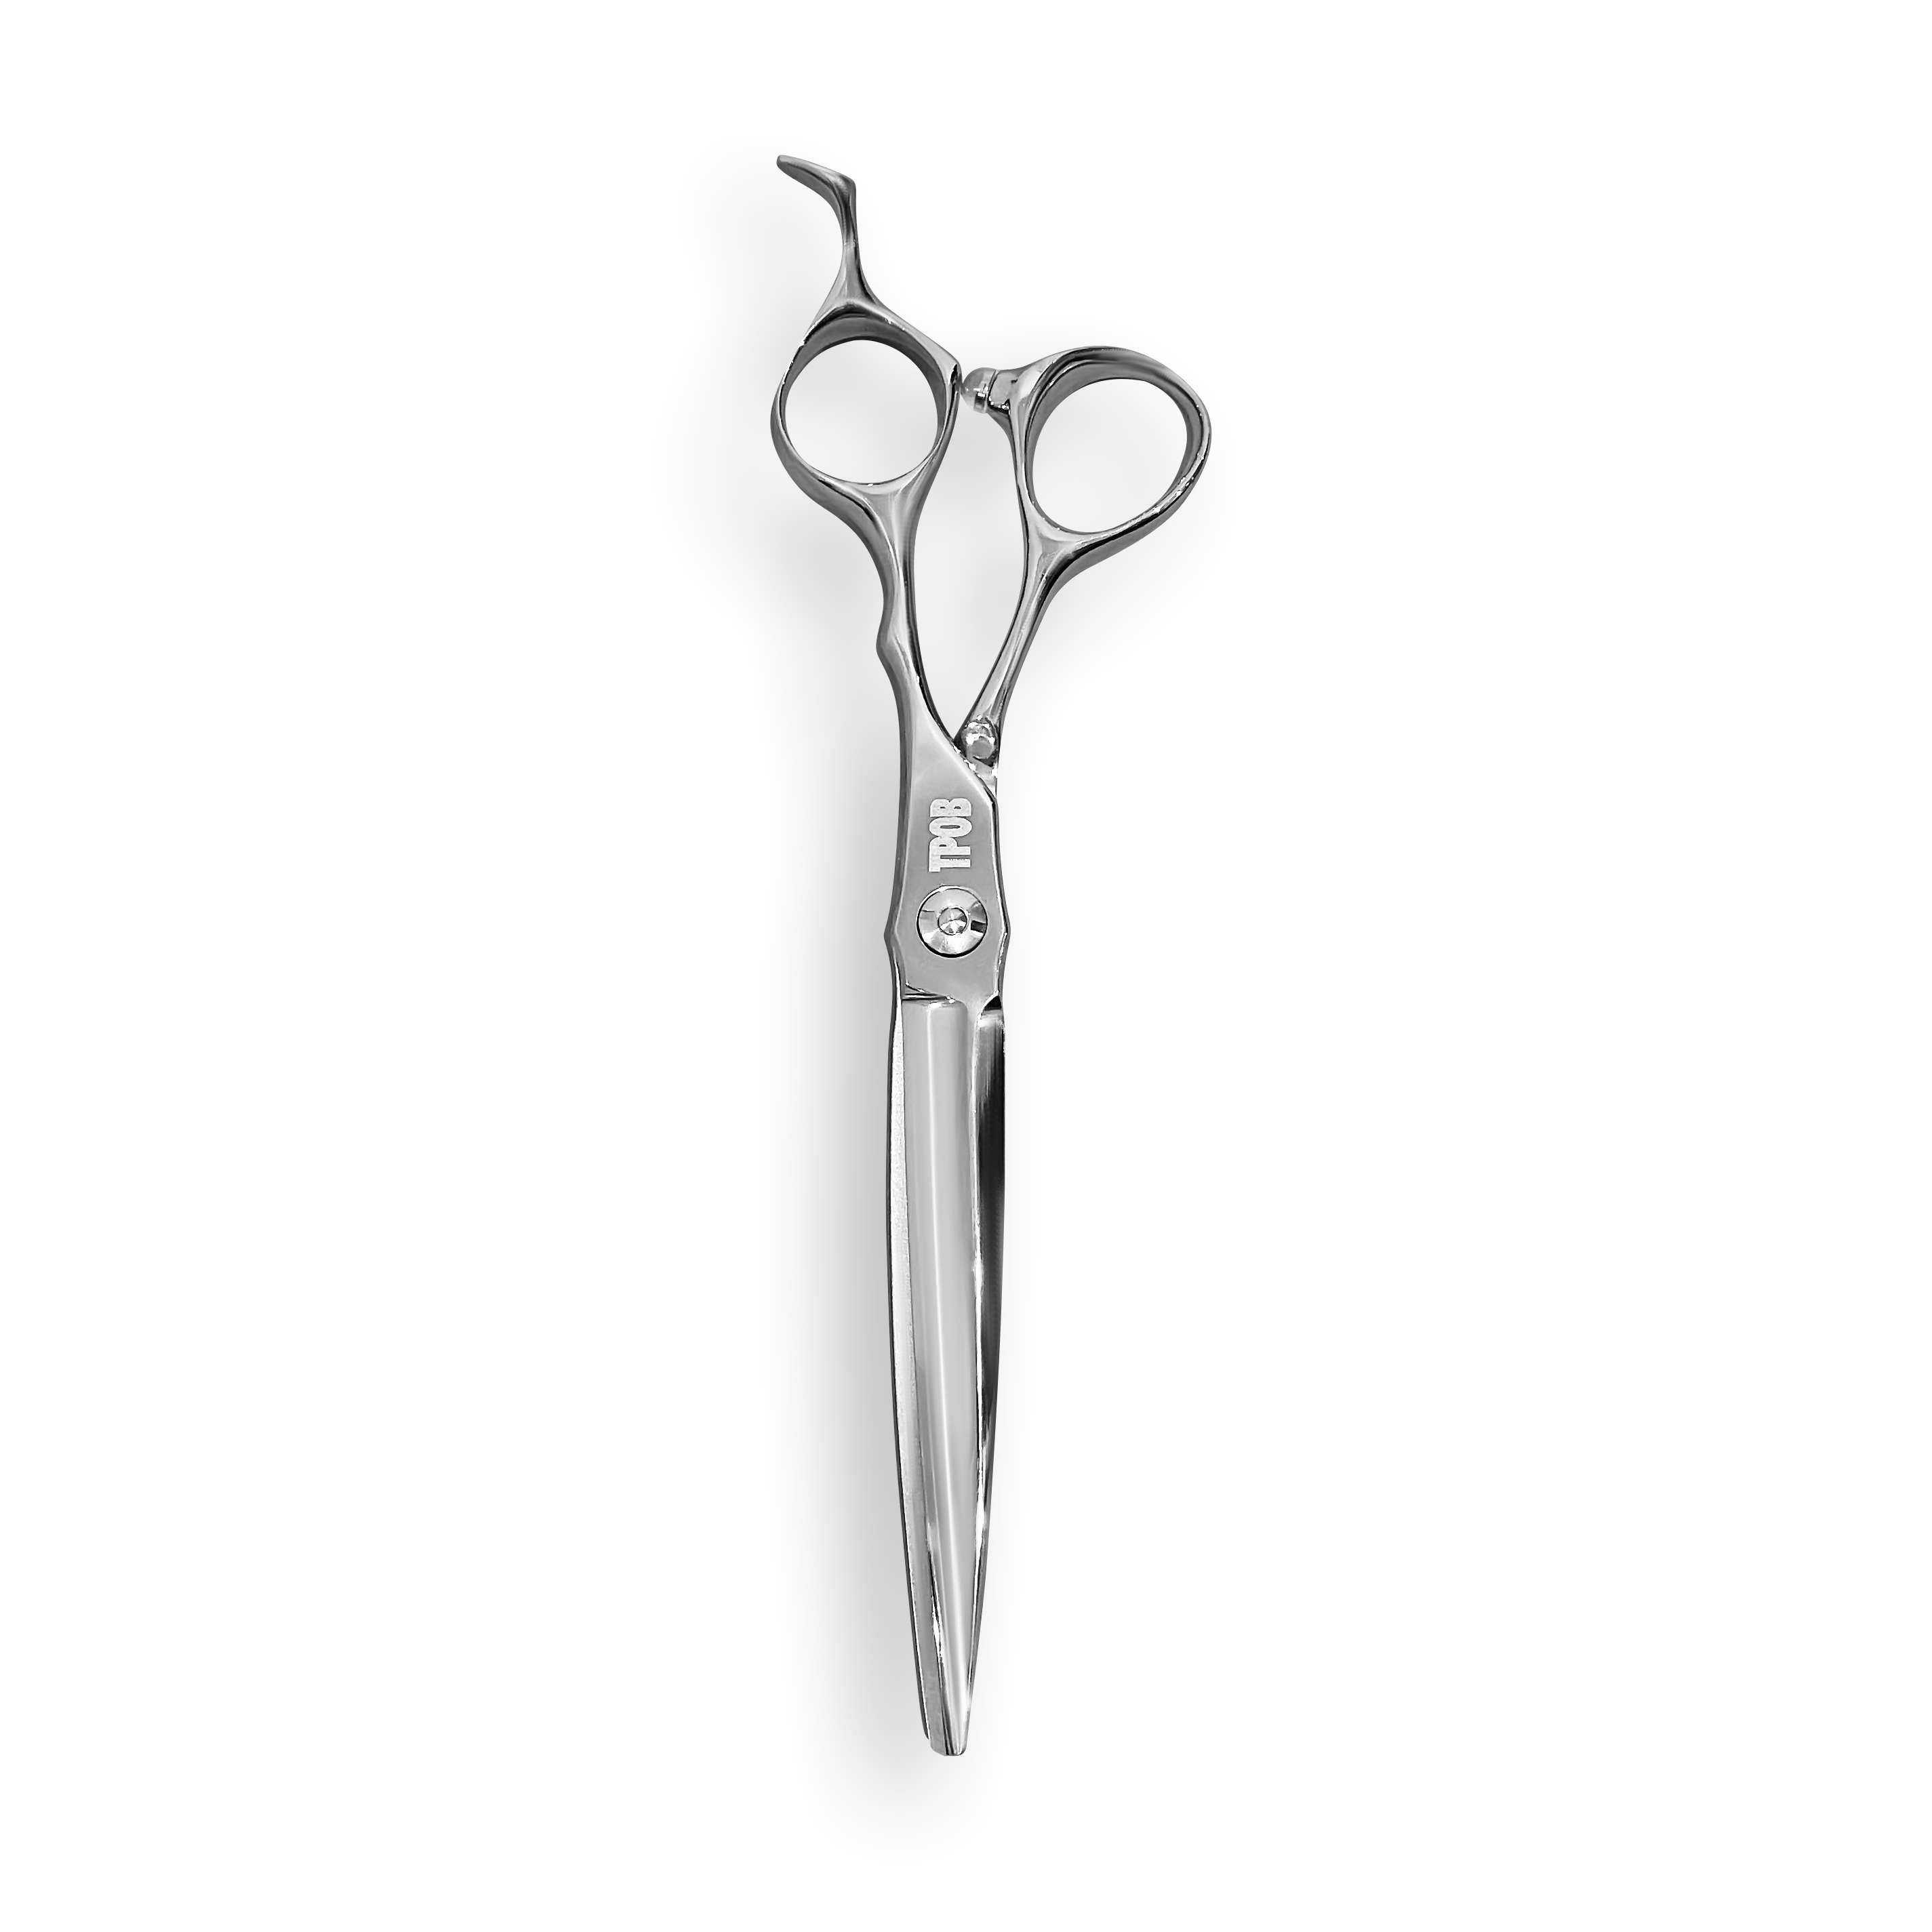 DOVO 7 Household Scissors Review - BLAKE'S BROADCAST